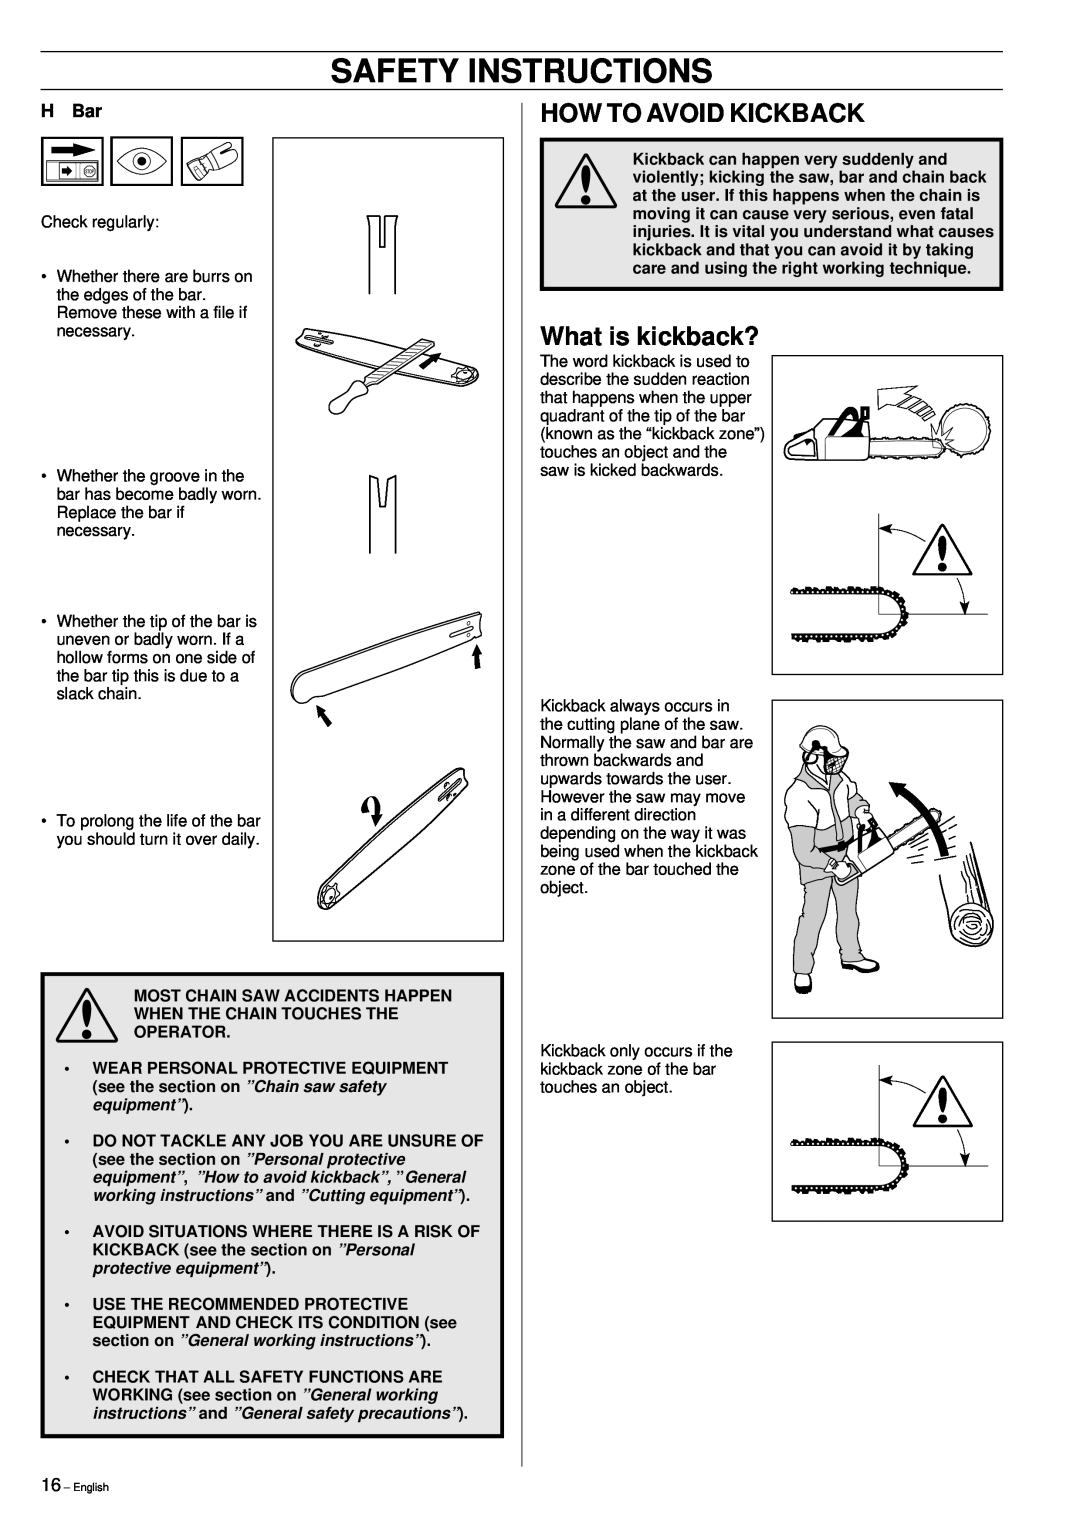 Husqvarna 51 manual Safety Instructions, How To Avoid Kickback, What is kickback?, H Bar 